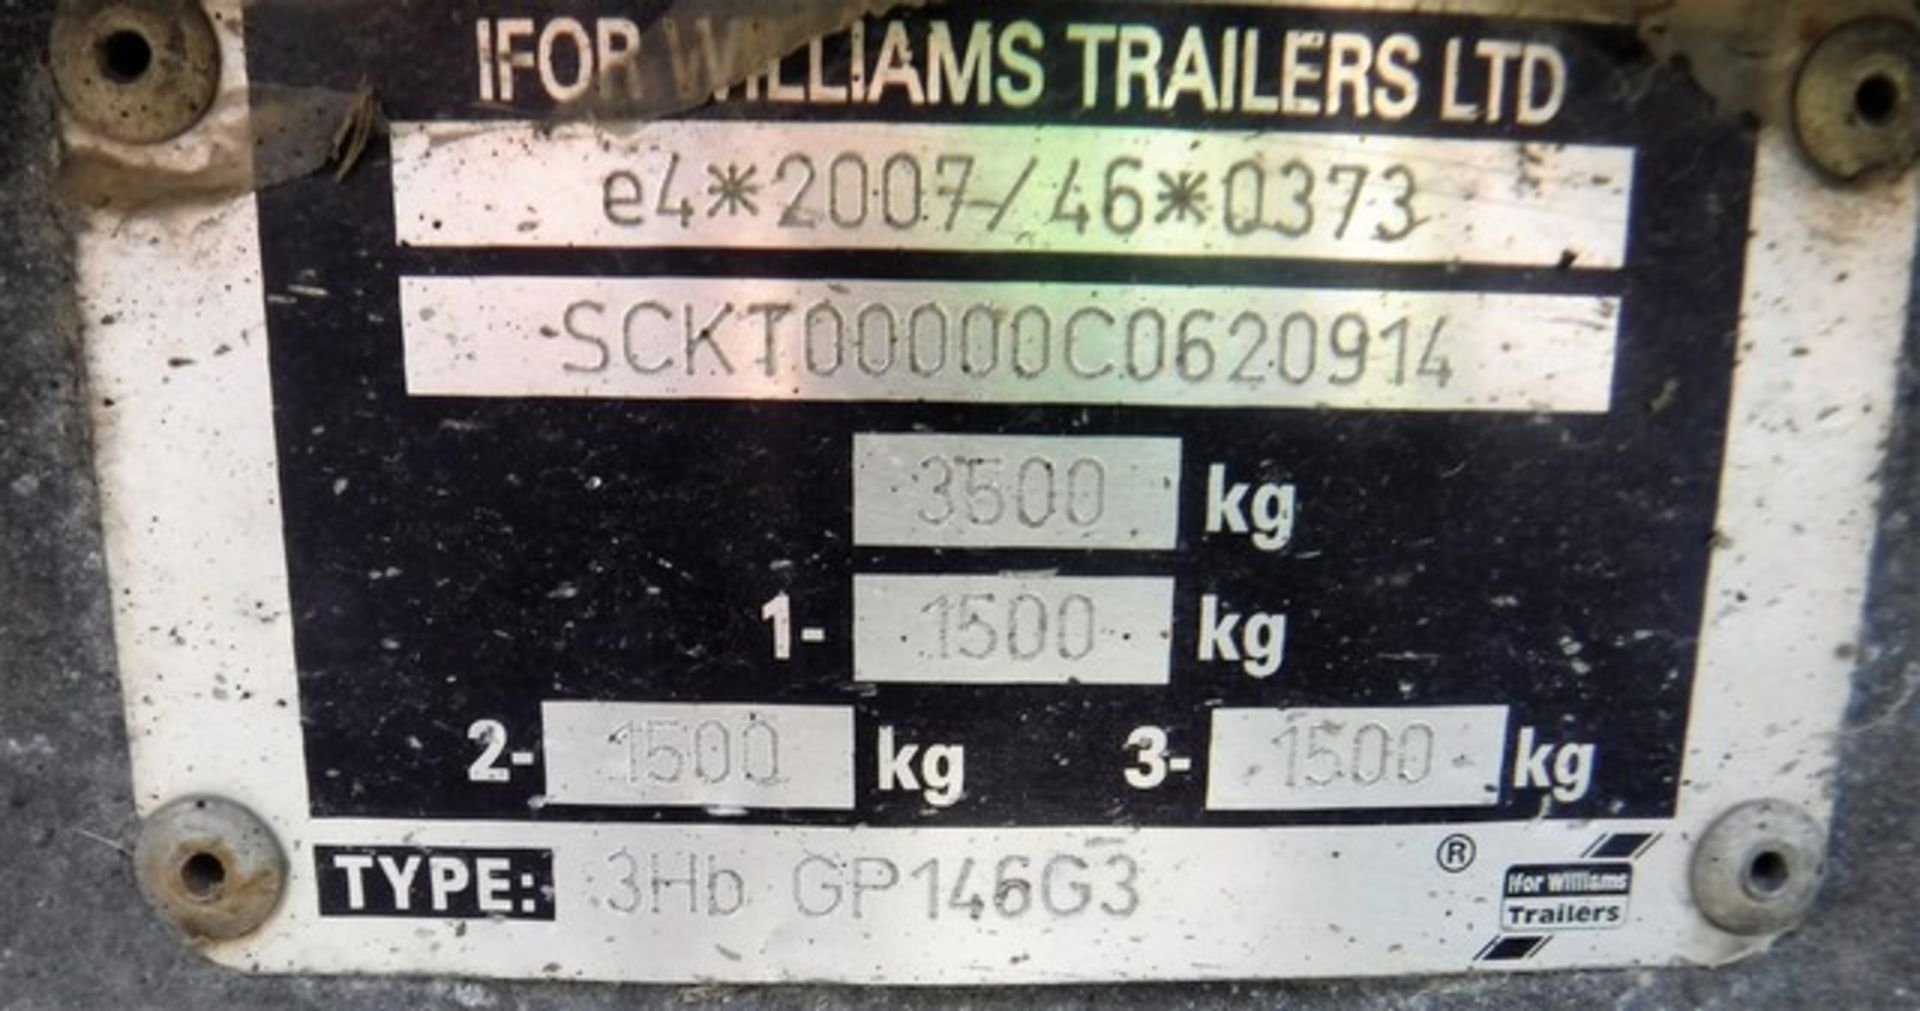 IFOR WILLIAMS, tripple axle trailer. Type - 3HB GP146G3. S/N - SCKT00000C0620914. Asset no - 758-505 - Image 4 of 5